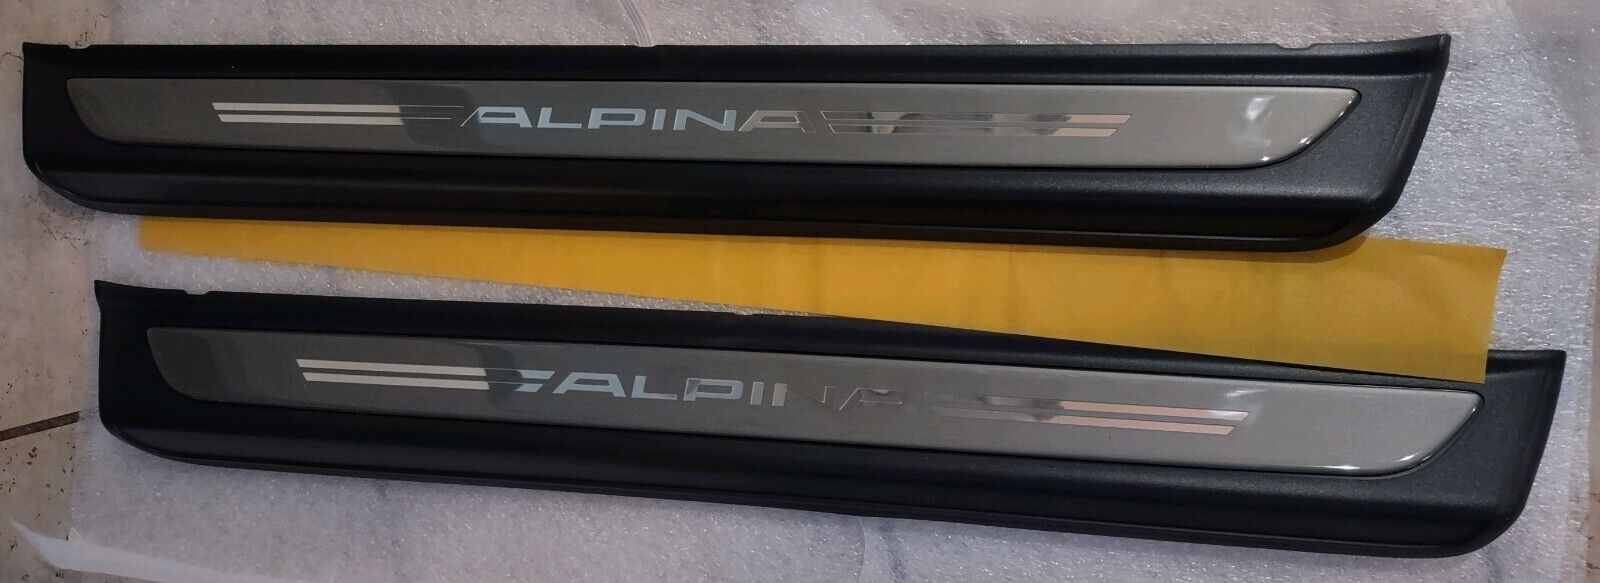 BMW F12 F13 6 Series Coupe Convertible Alpina Illuminated Door Sill Tread Plates